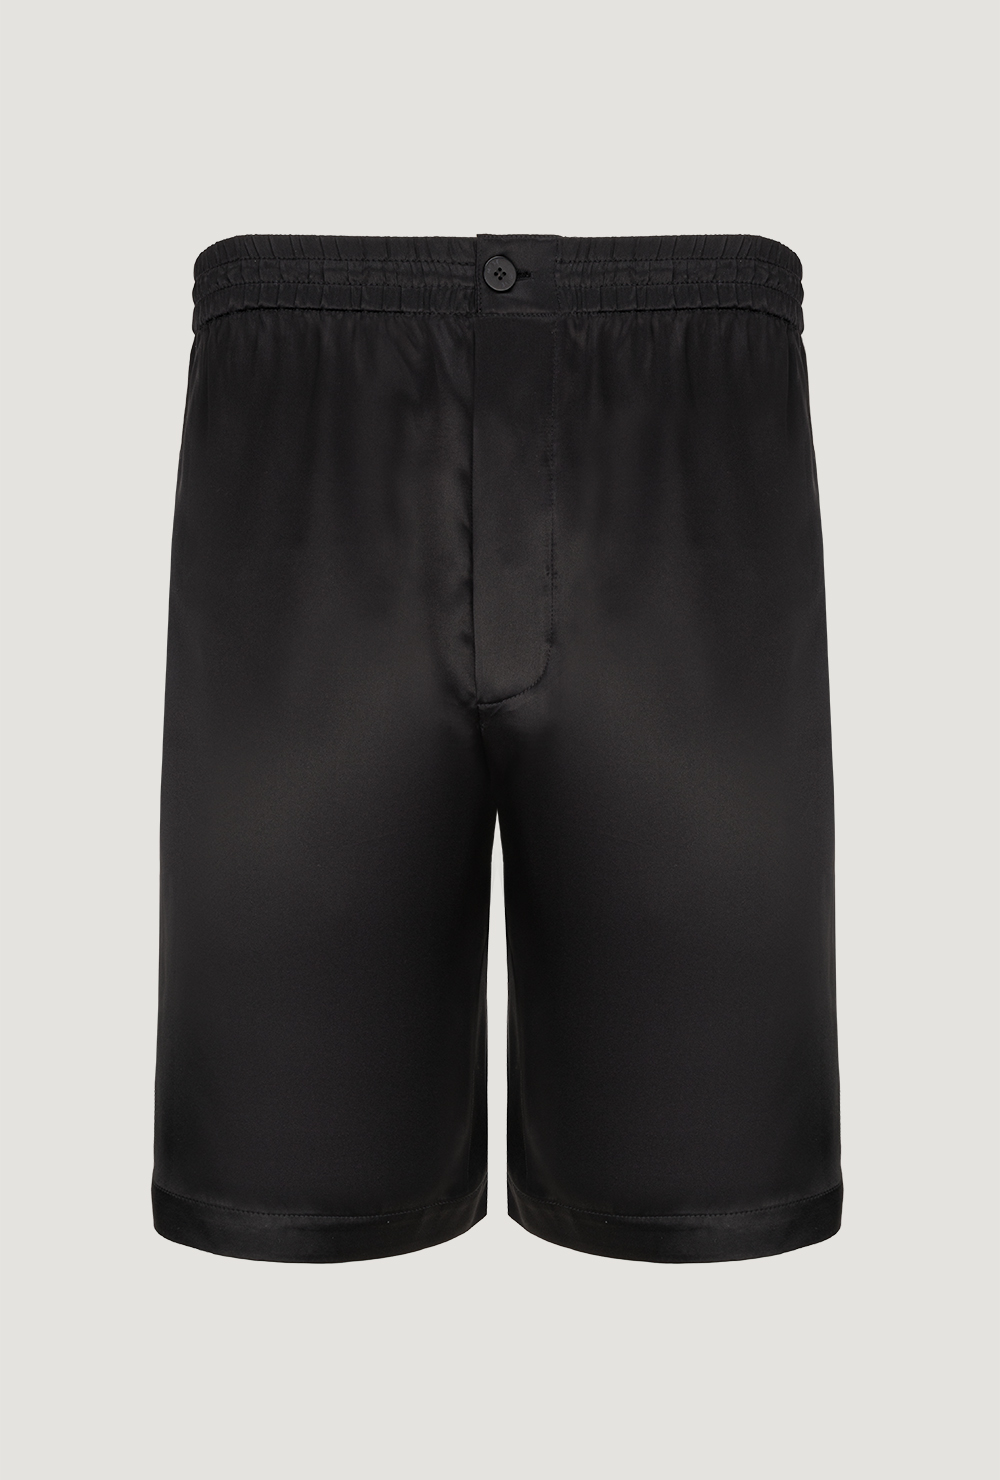 Silk men's shorts made of black satin